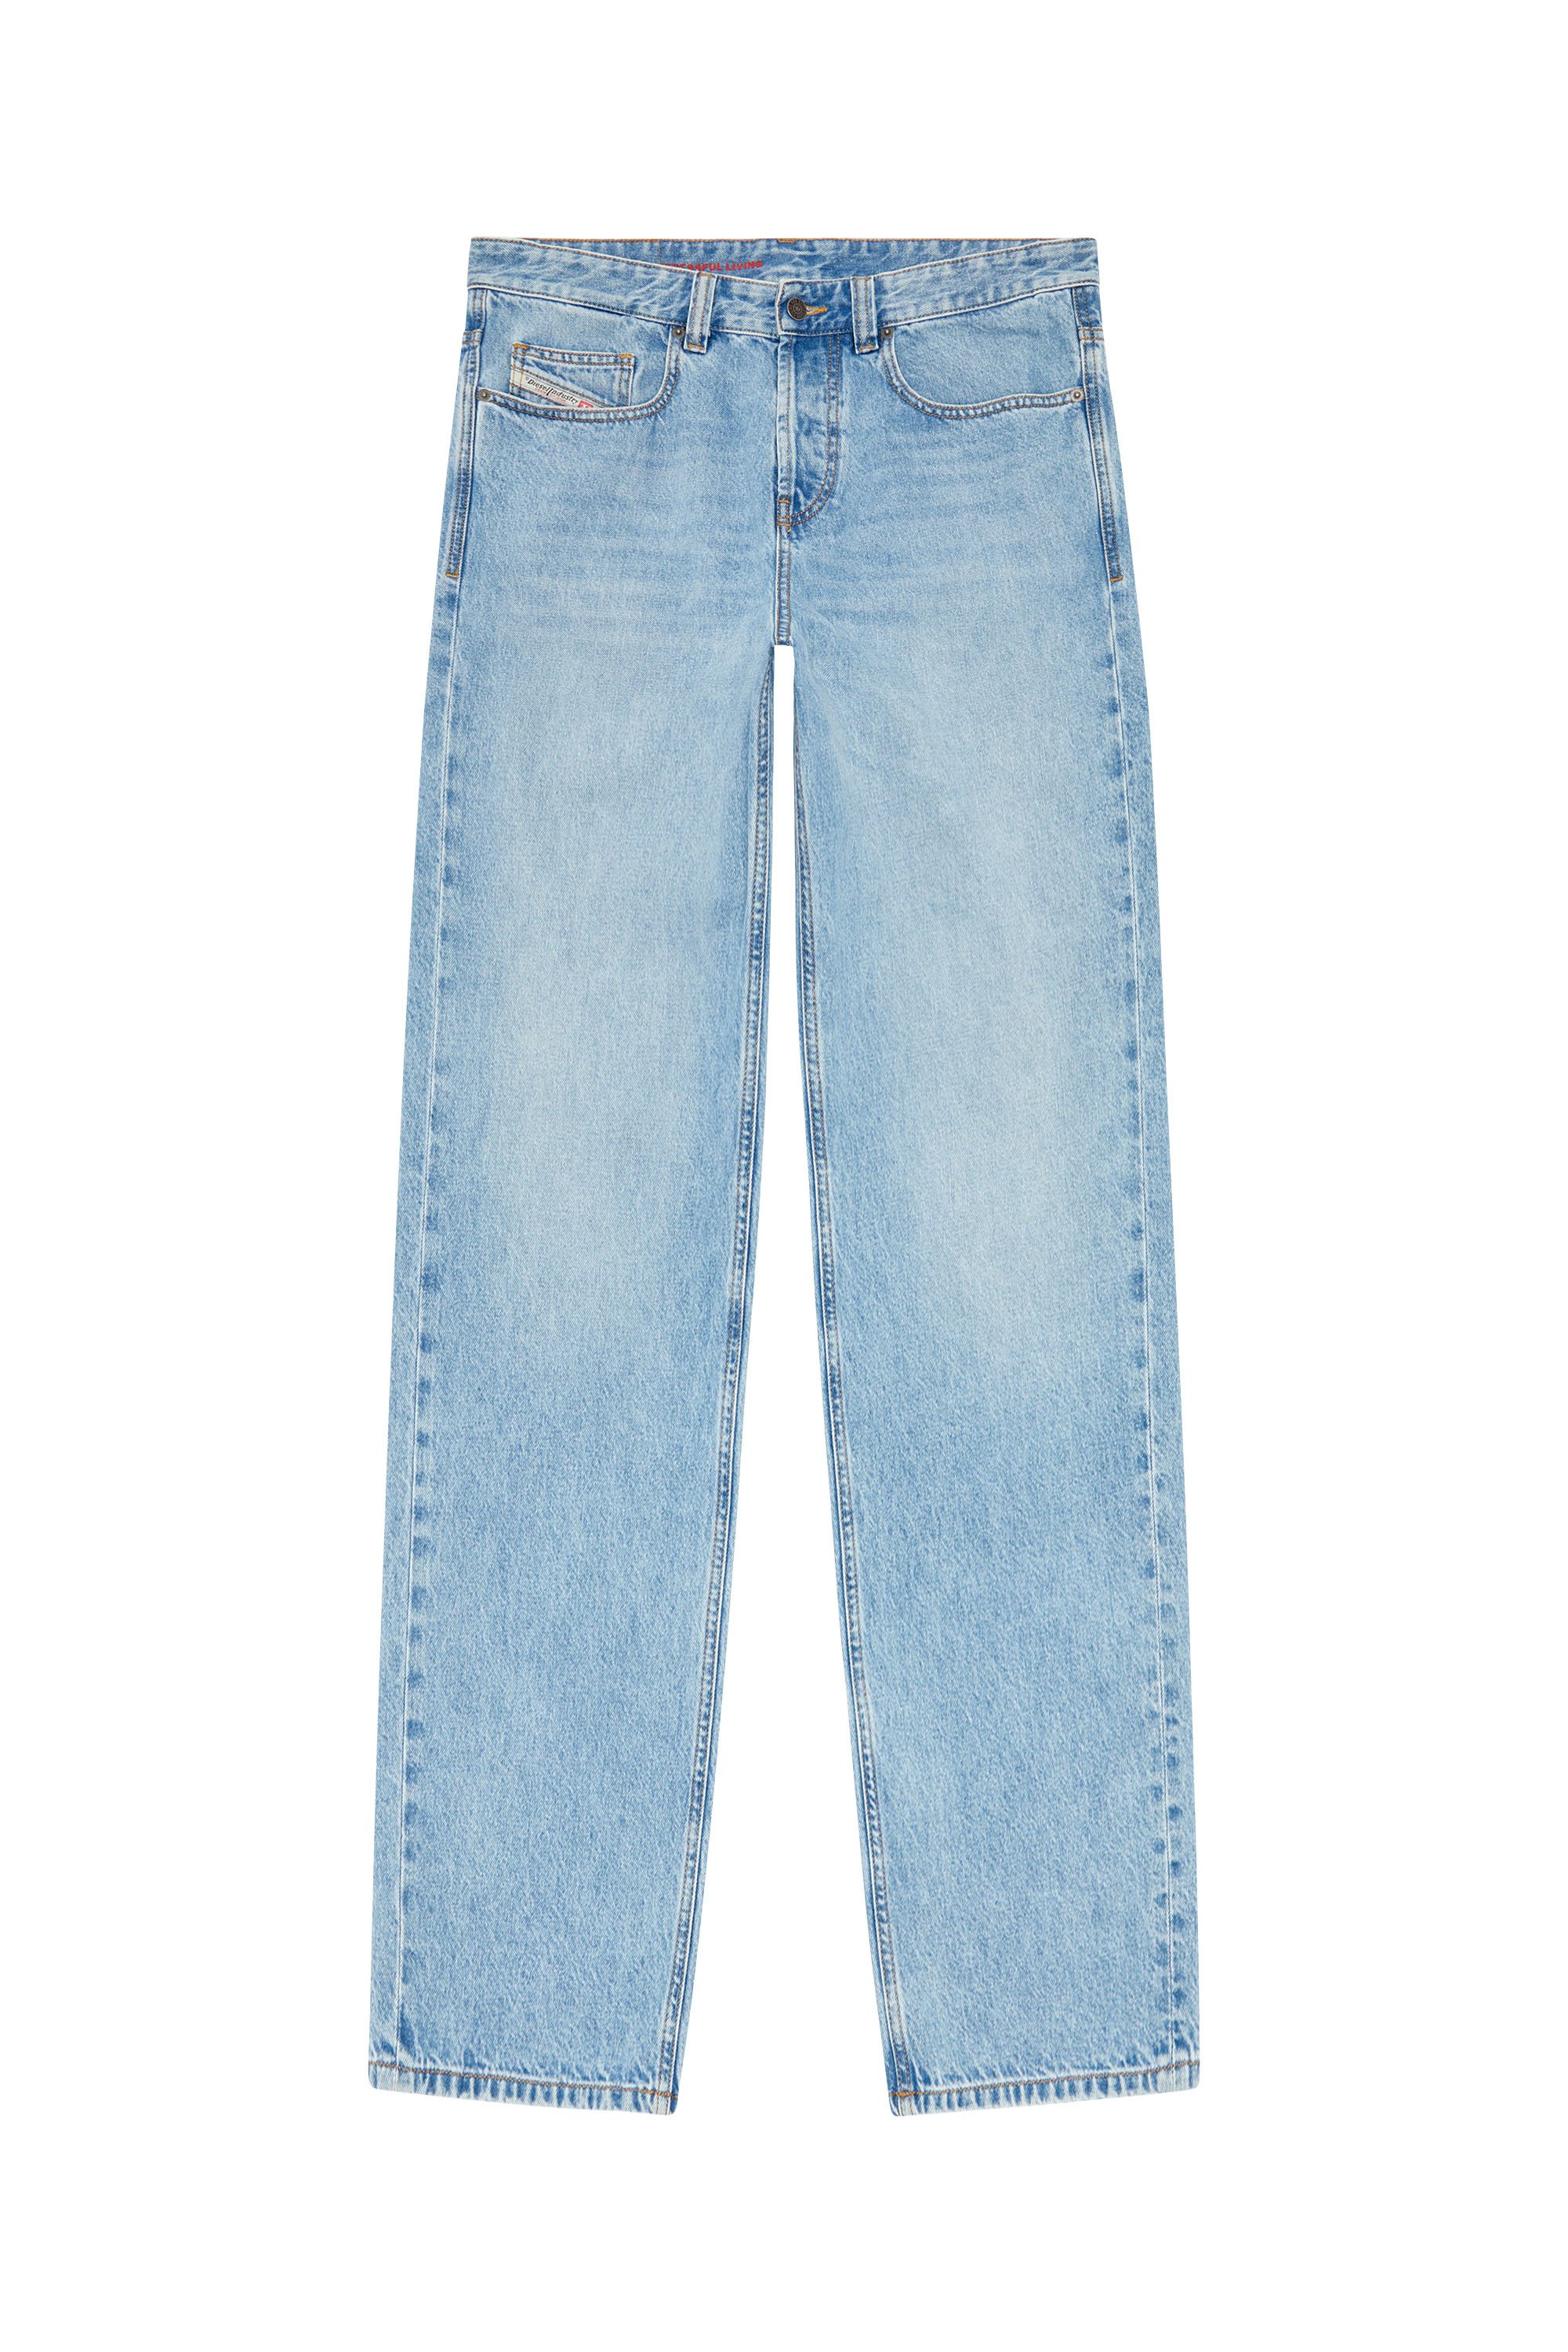 Men's New Denim: Jeans, Shirts, Bomber & Moto Jackets | Diesel®